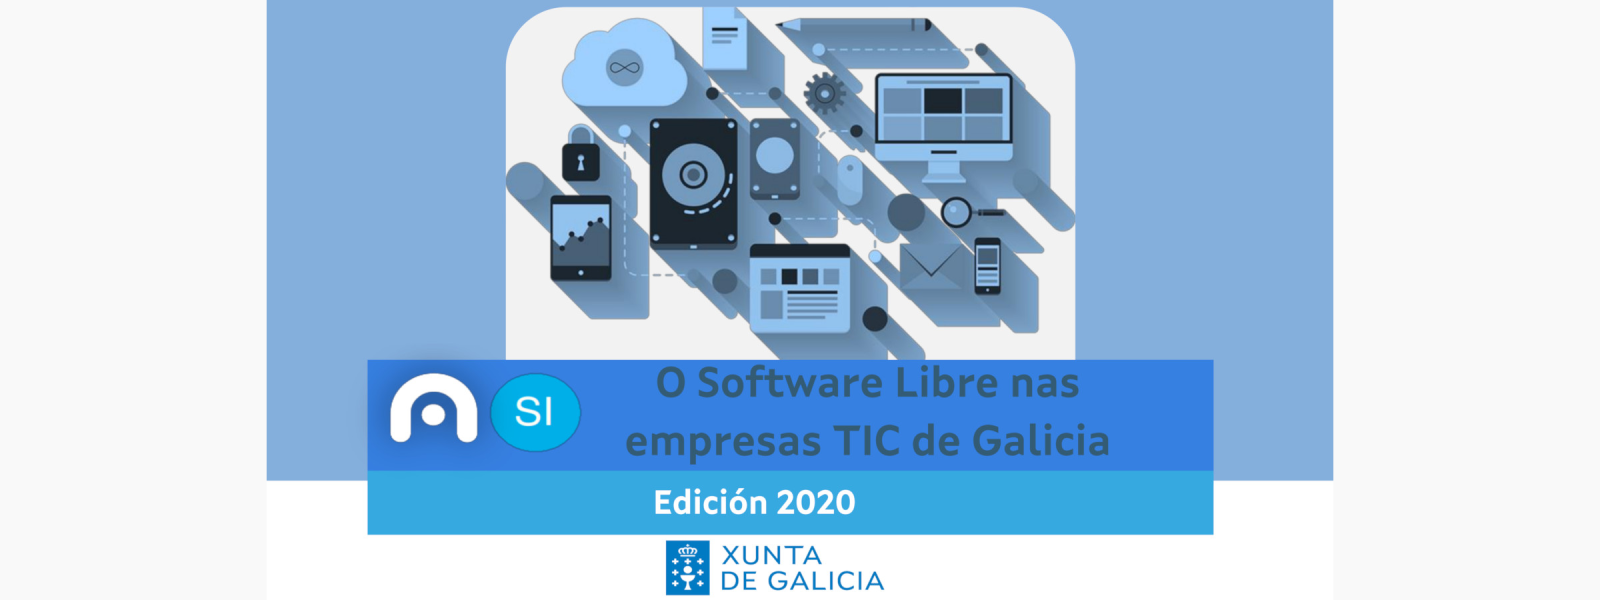 O software libre nas empresas TIC de Galicia, ano 2020